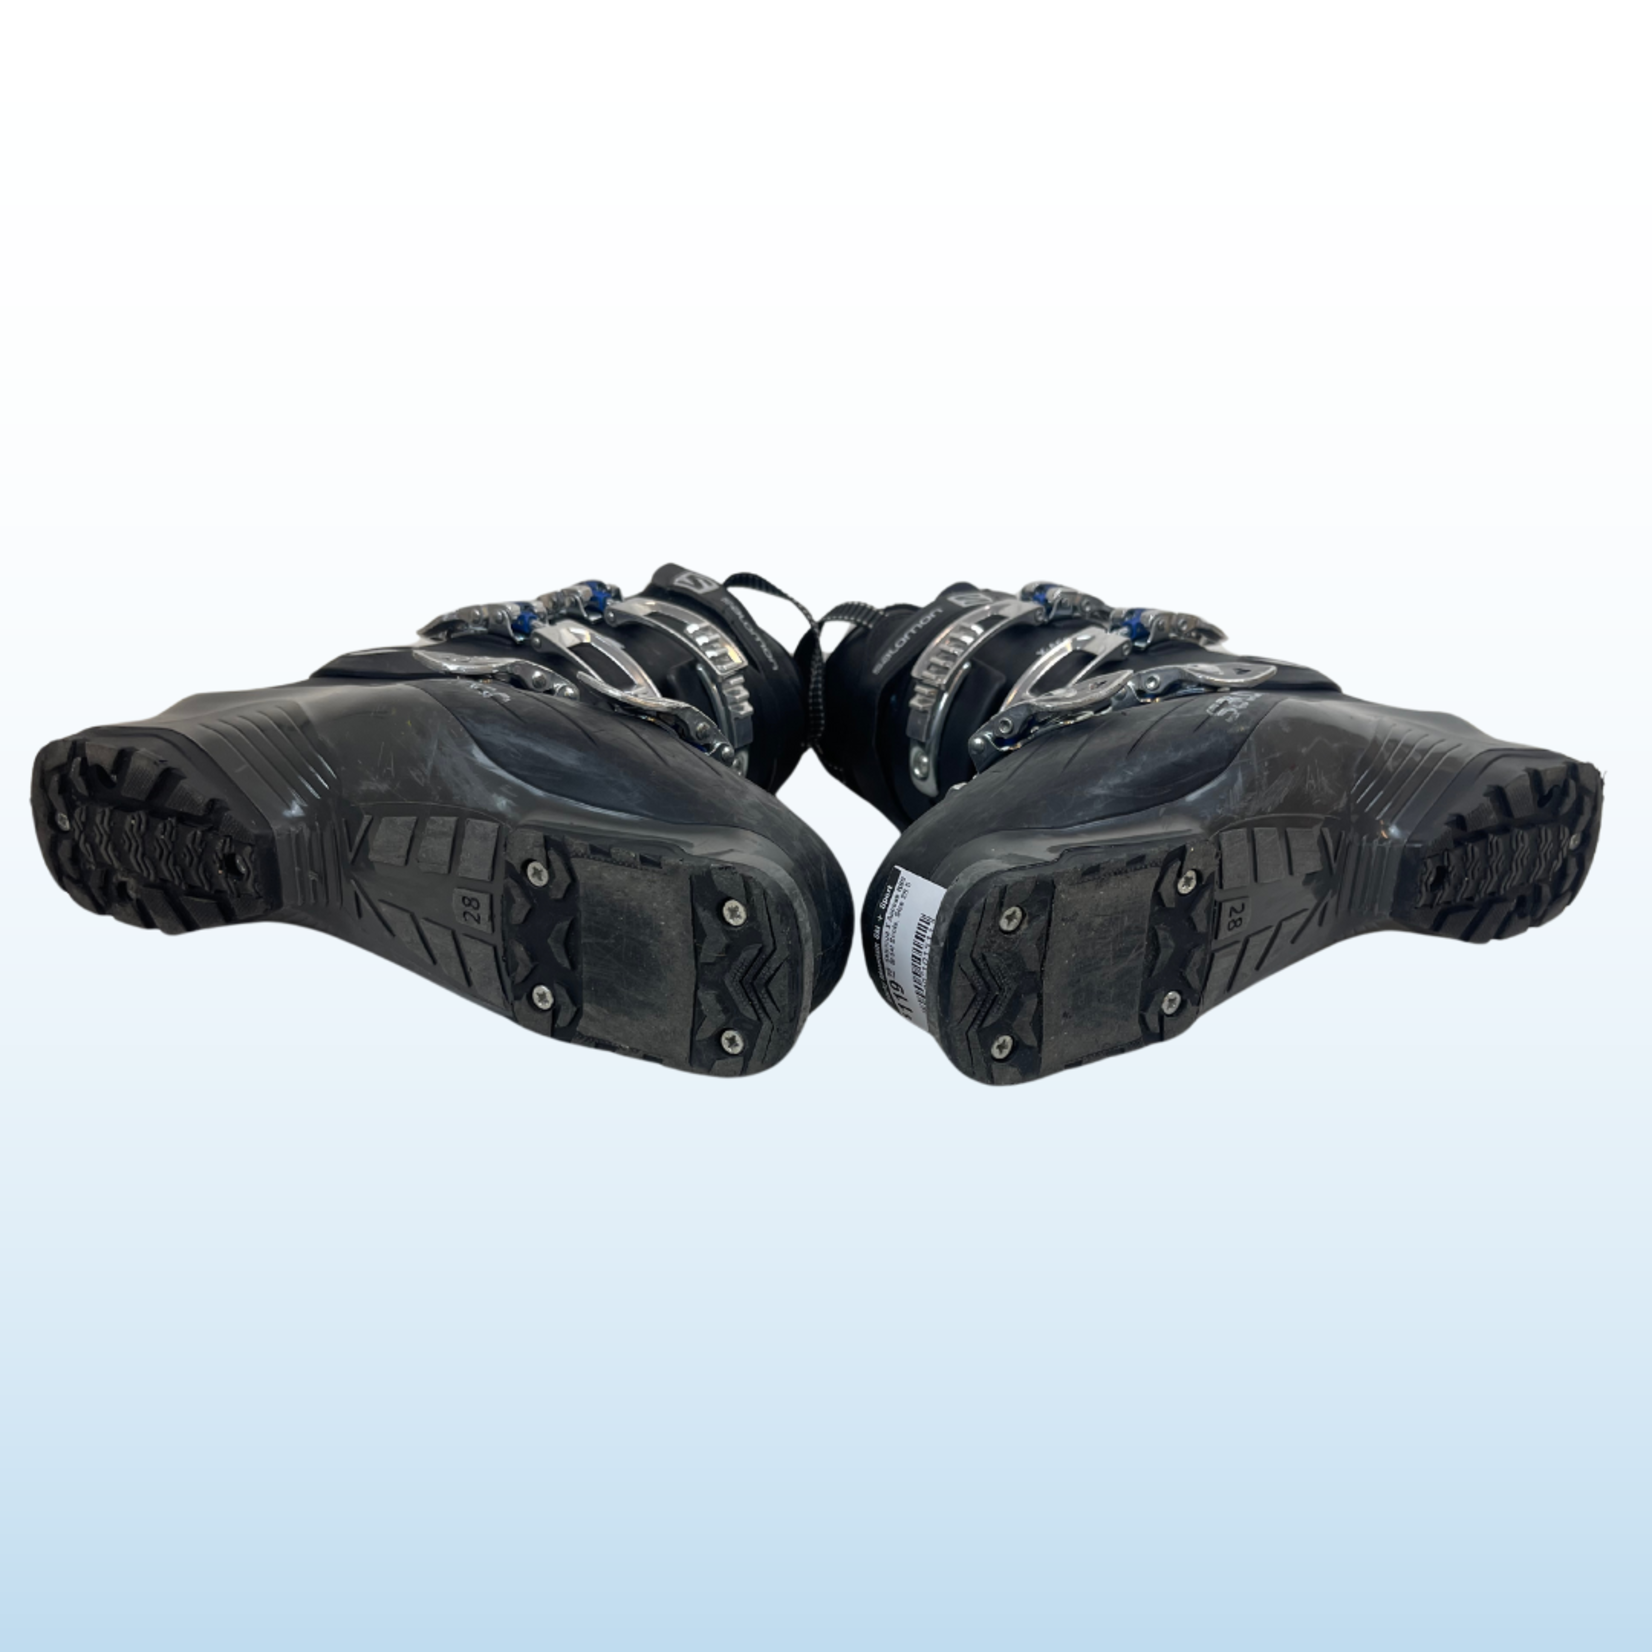 Salomon Salomon X Access R80 W Ski Boots, Size 31.5